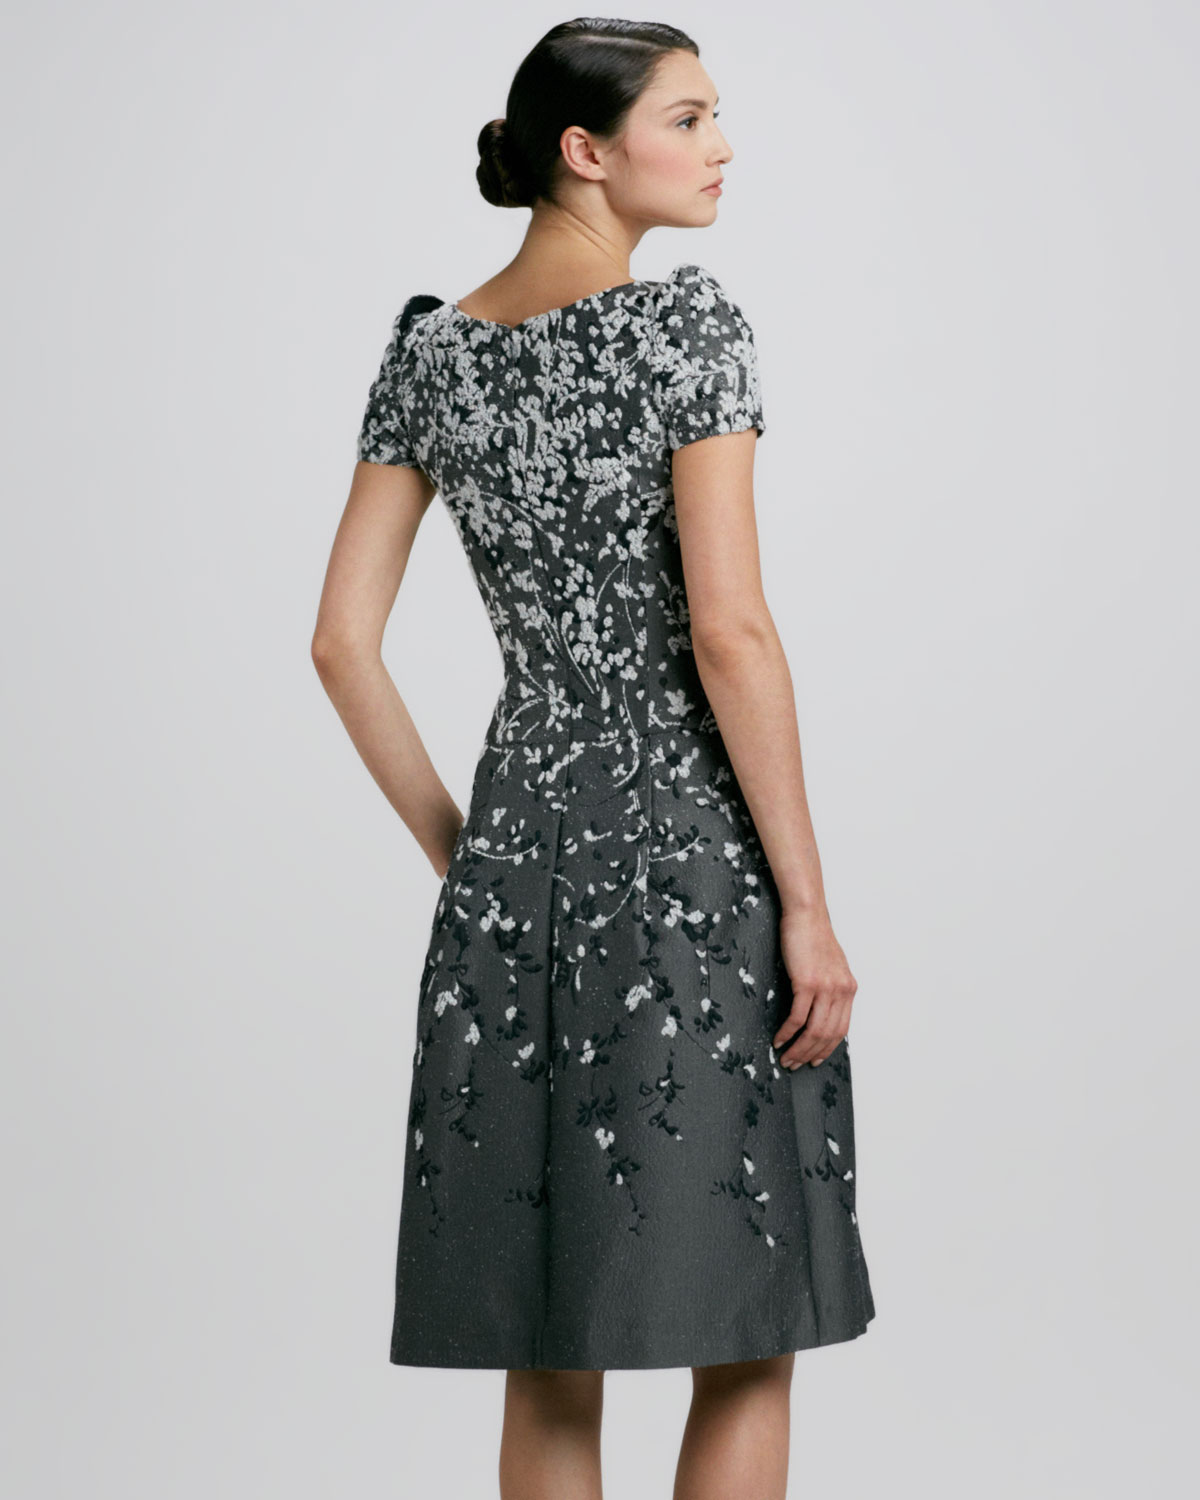 Lyst - Carolina Herrera Floral Peakedshoulder Jacquard Dress in Gray